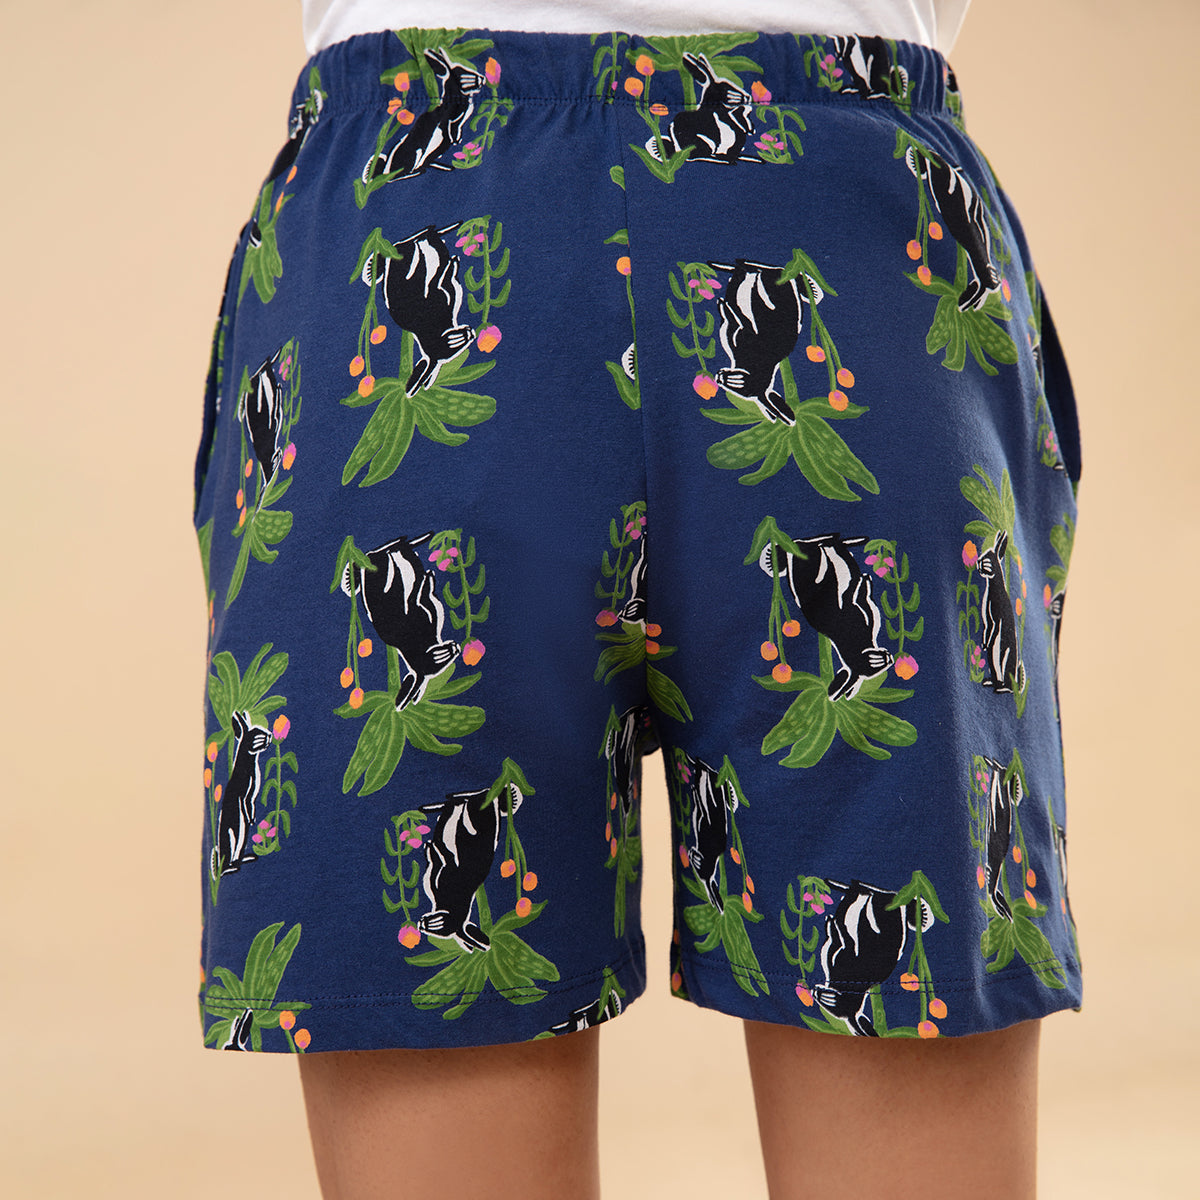 Masaba For Nykd Cotton Shorts - Palm Rabbit NYS082